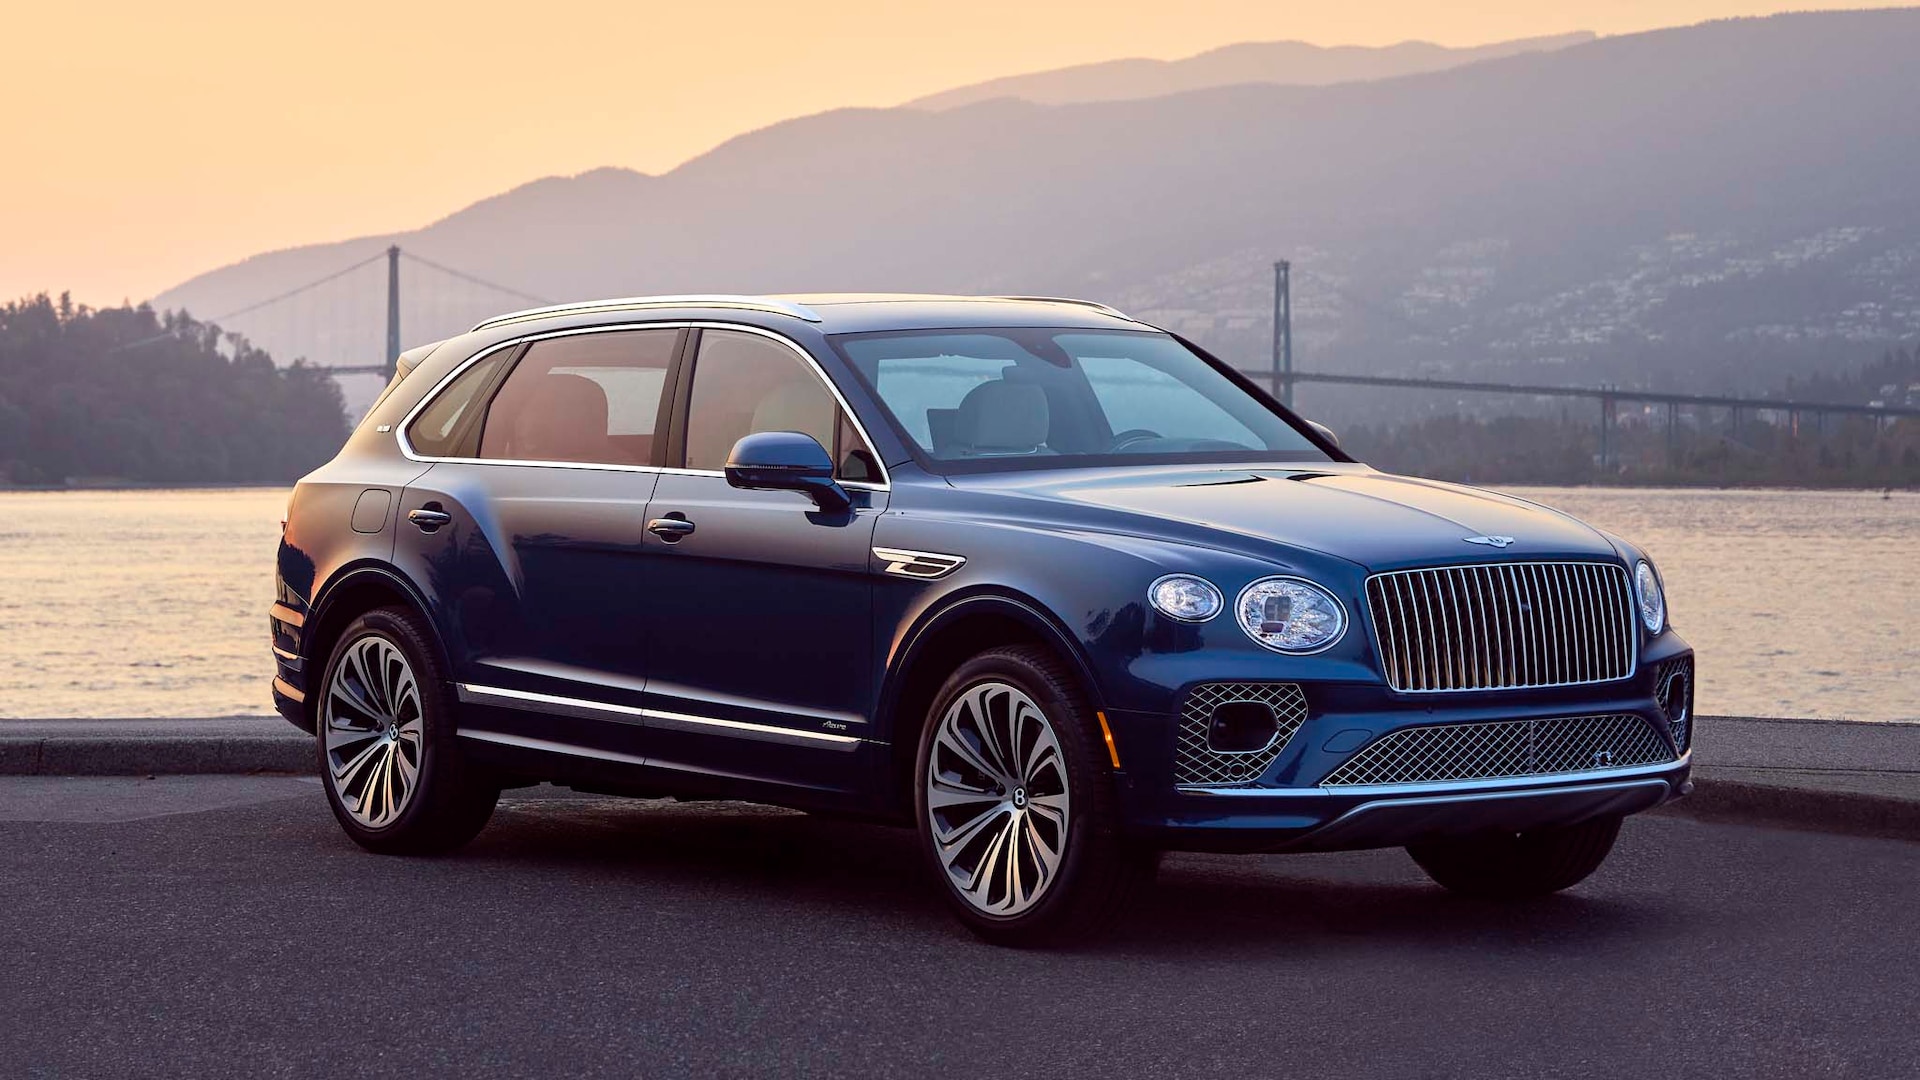 2023 Bentley Bentayga Prices, Reviews, and Photos - MotorTrend